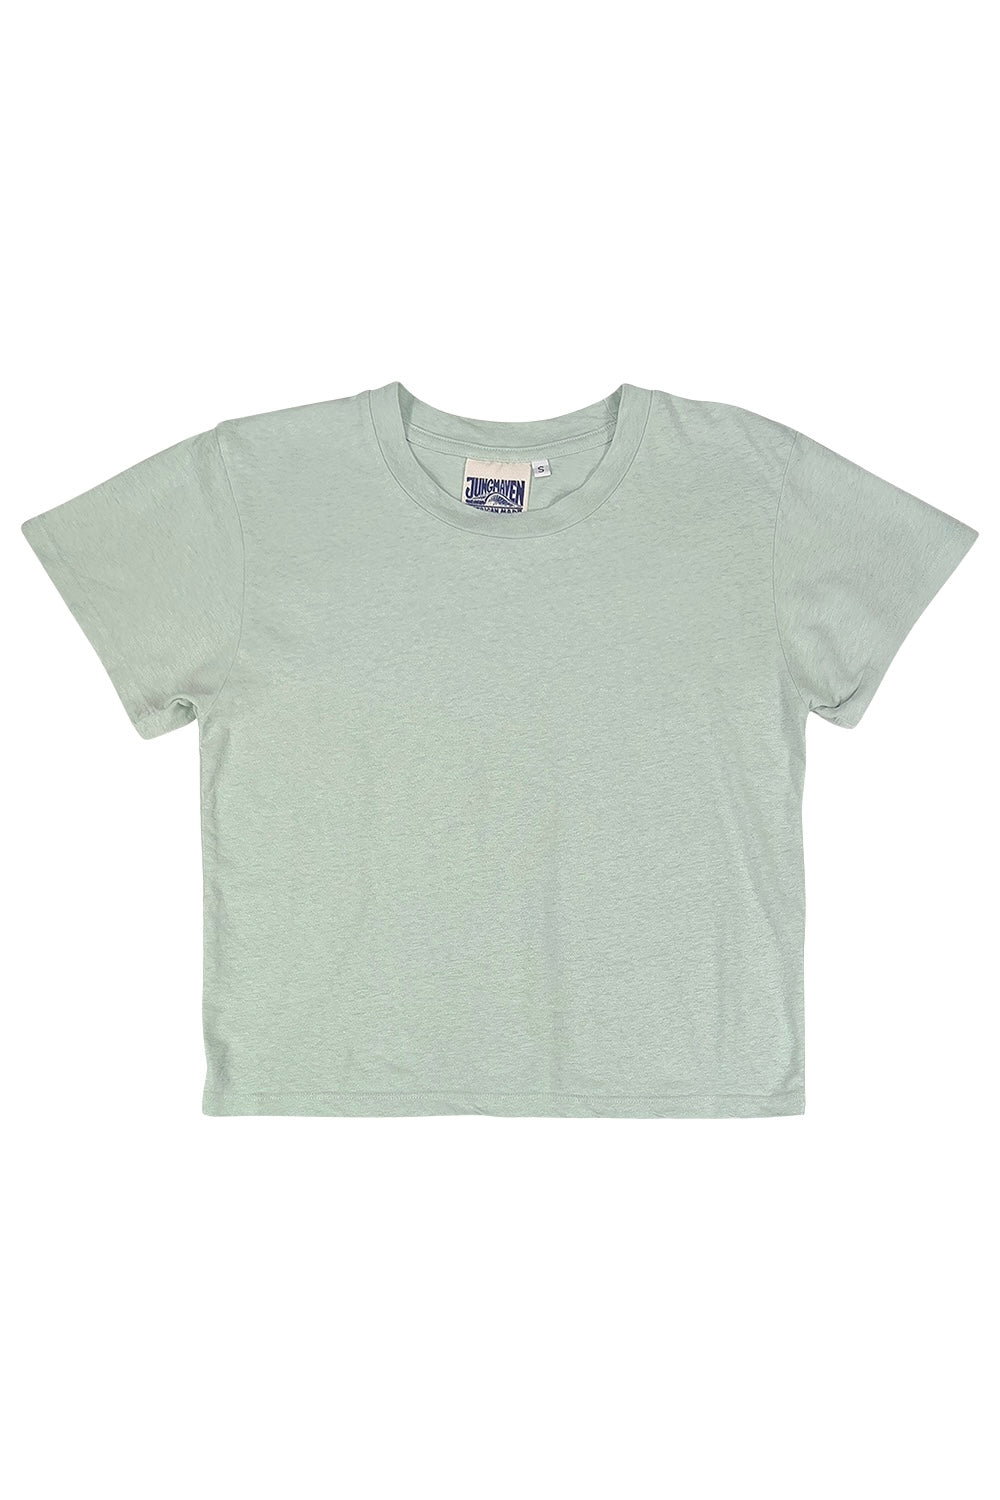 Cropped Lorel Tee | Jungmaven Hemp Clothing & Accessories / Color:Seafoam Green